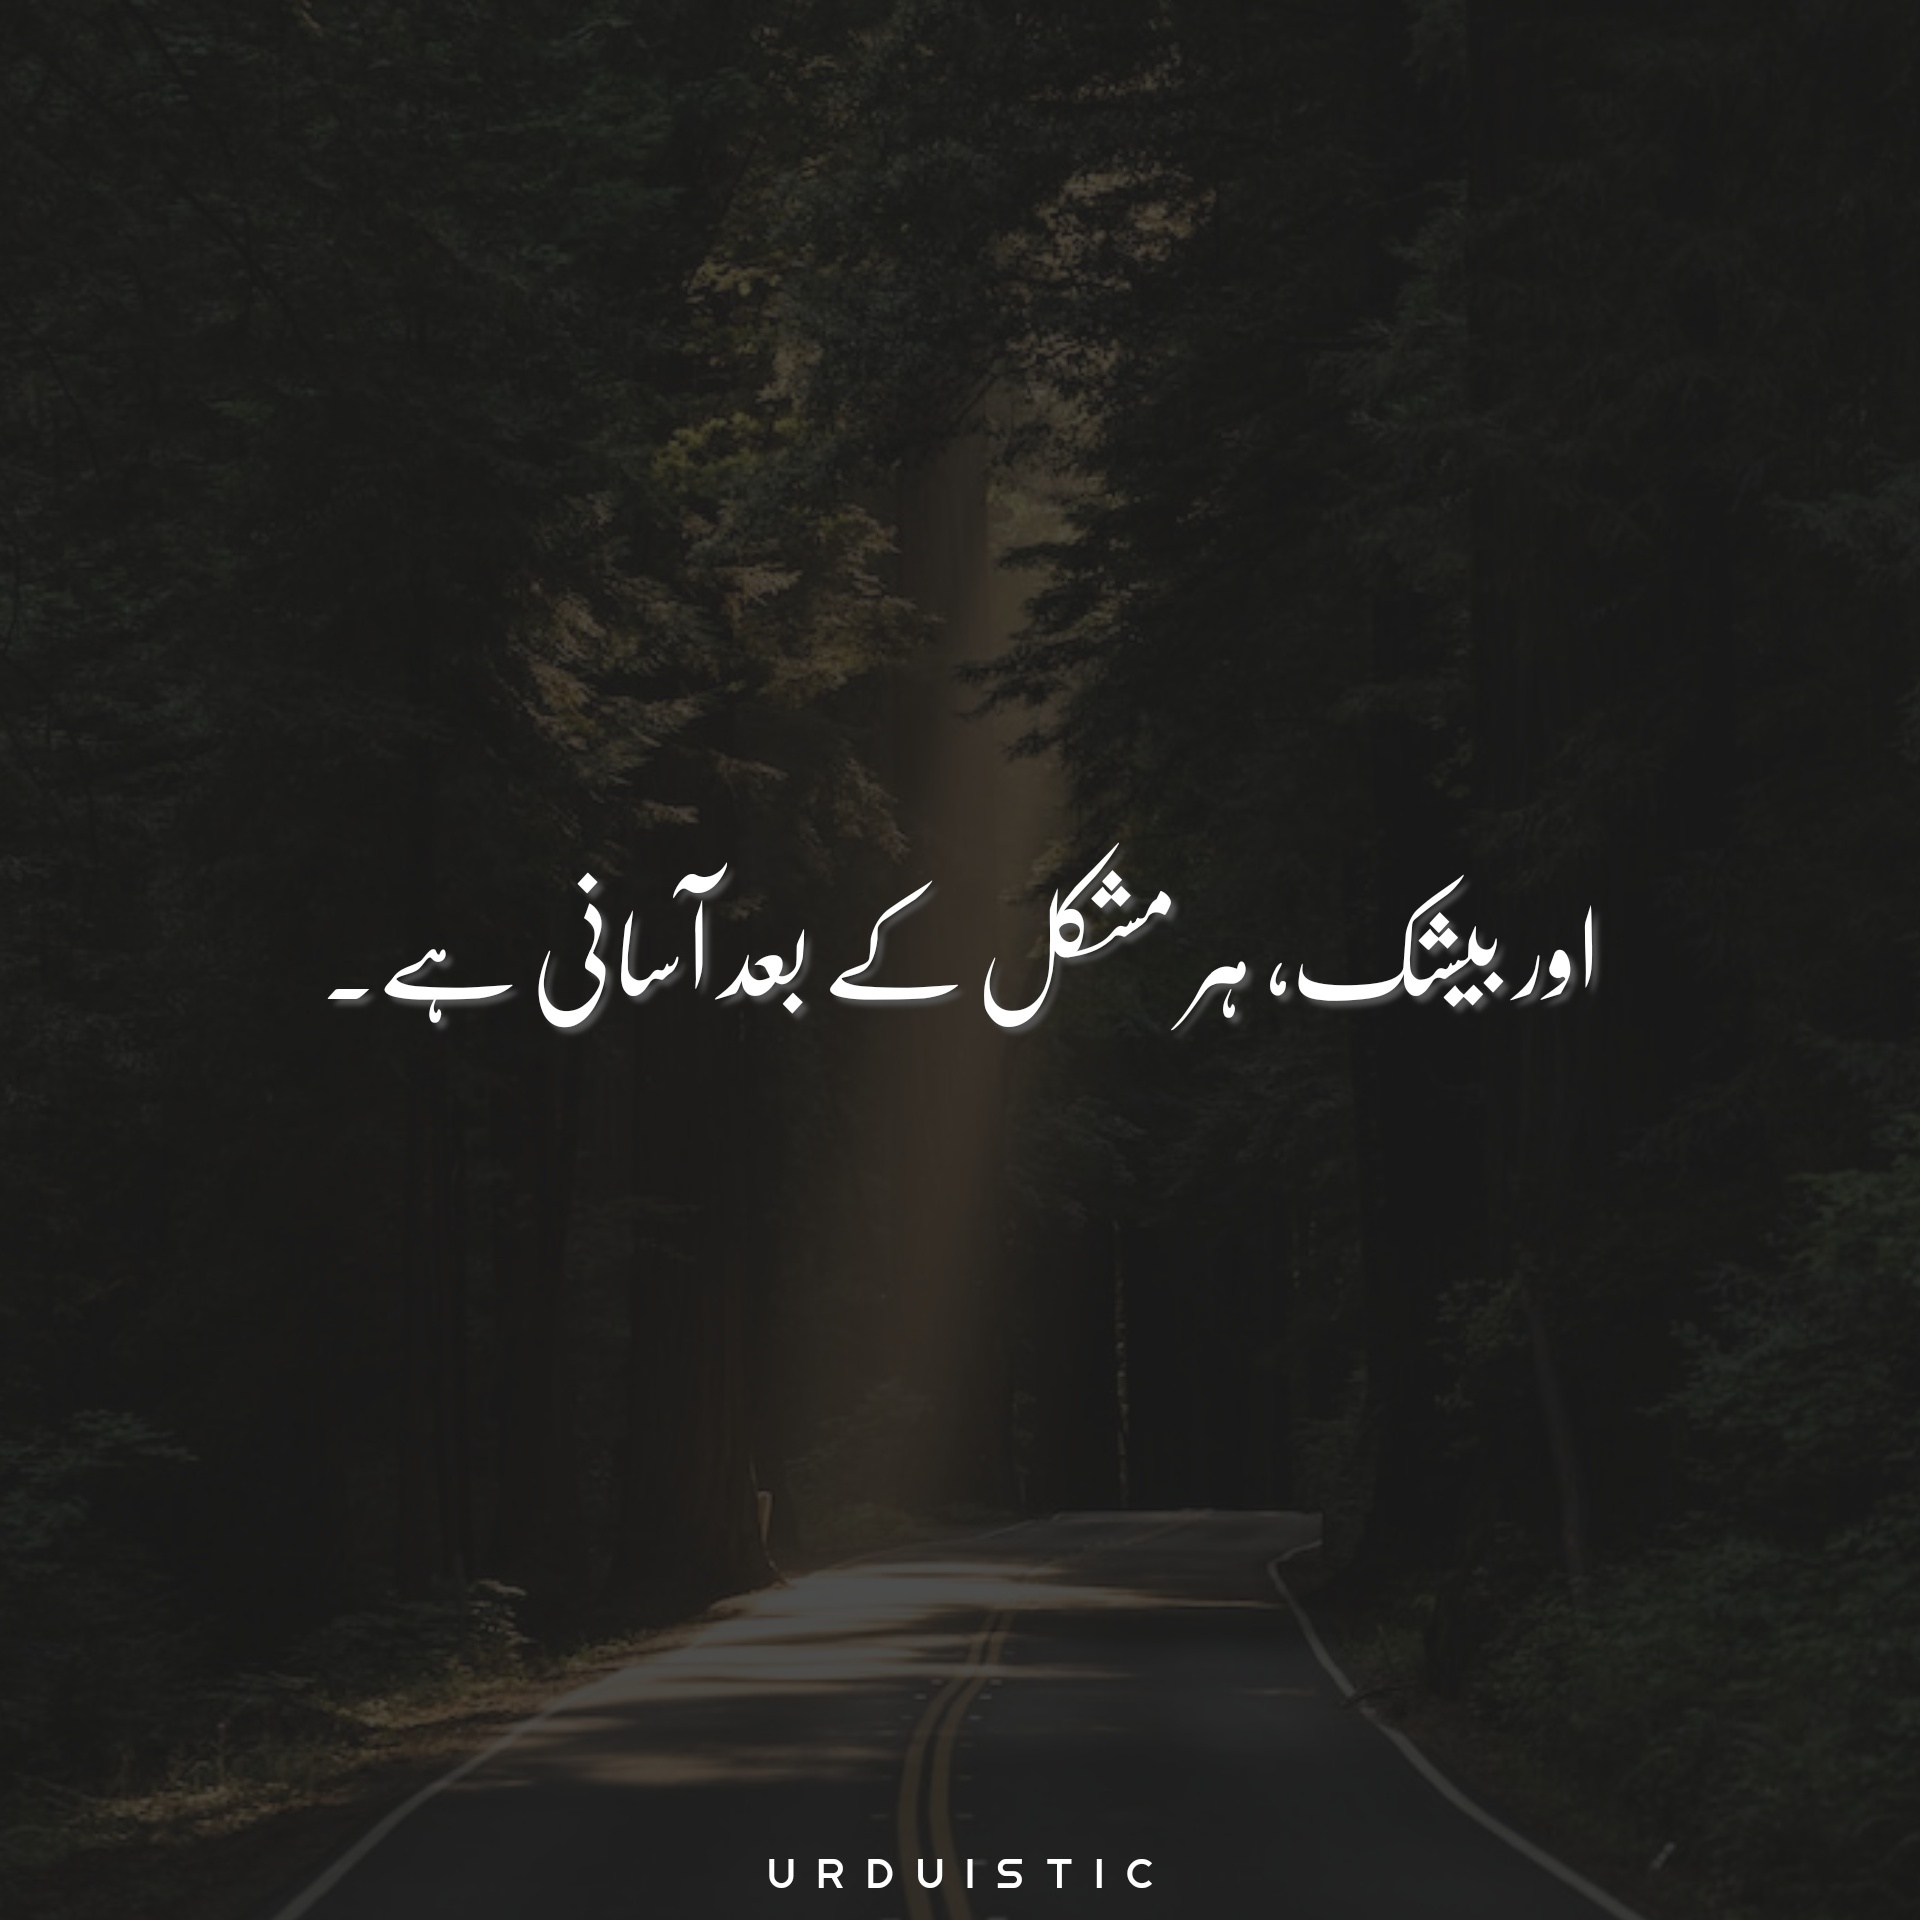 Urdu One Line Captions